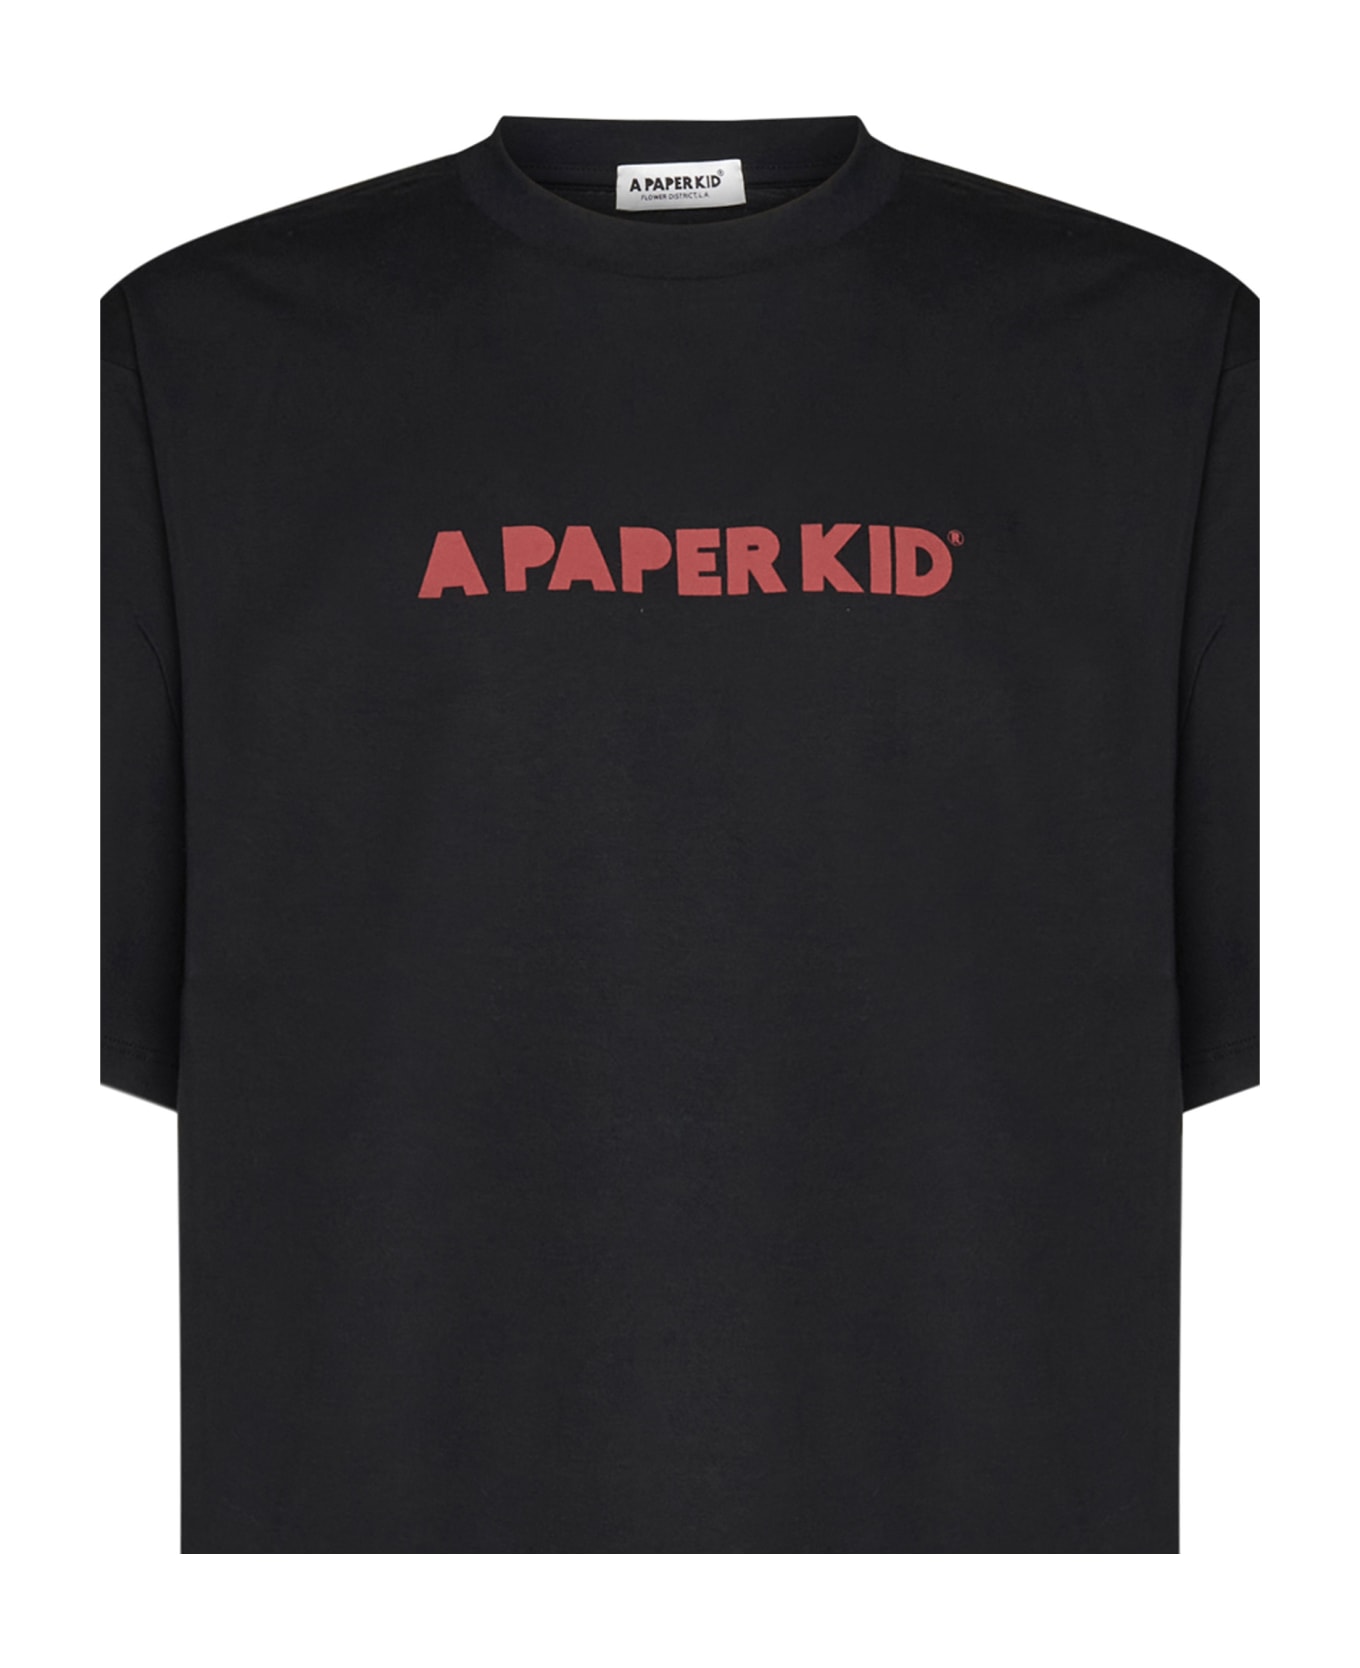 A Paper Kid T-Shirt - Black